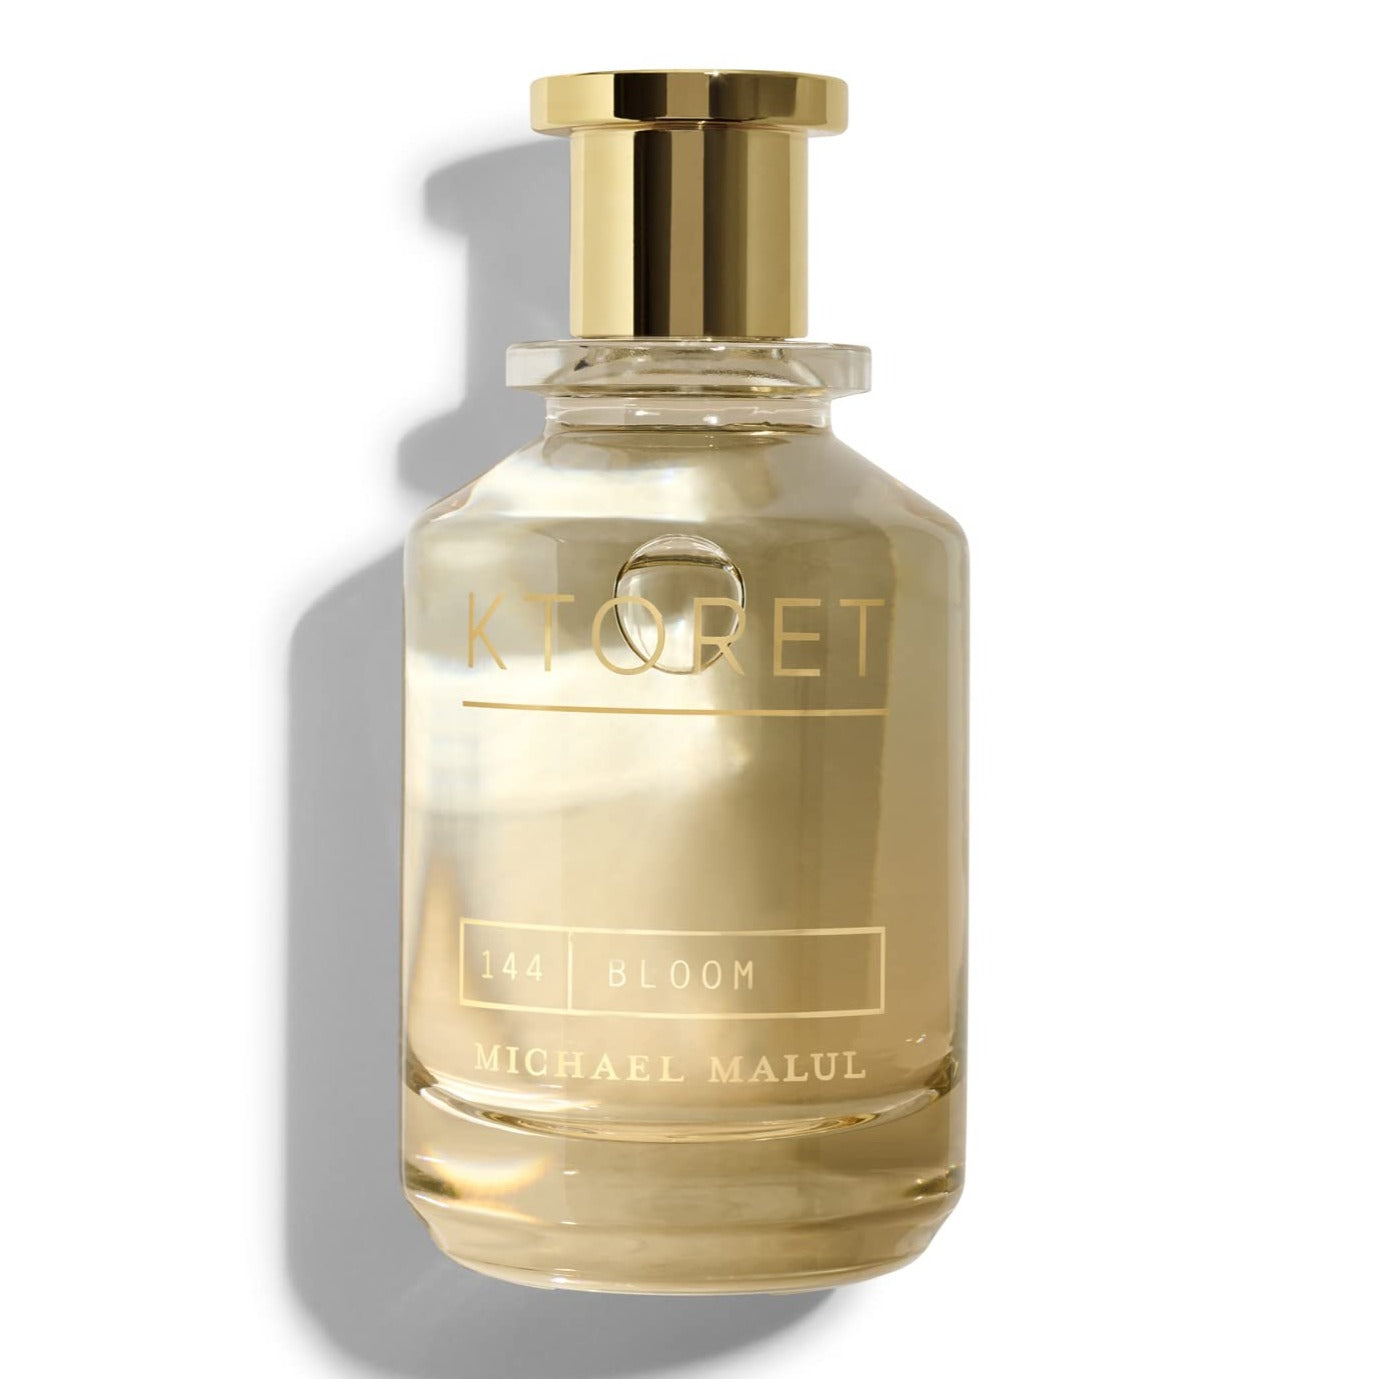 Buy Lanvin Eclat De Fleurs Perfume Eau de Parfum - 100 ml Online In India